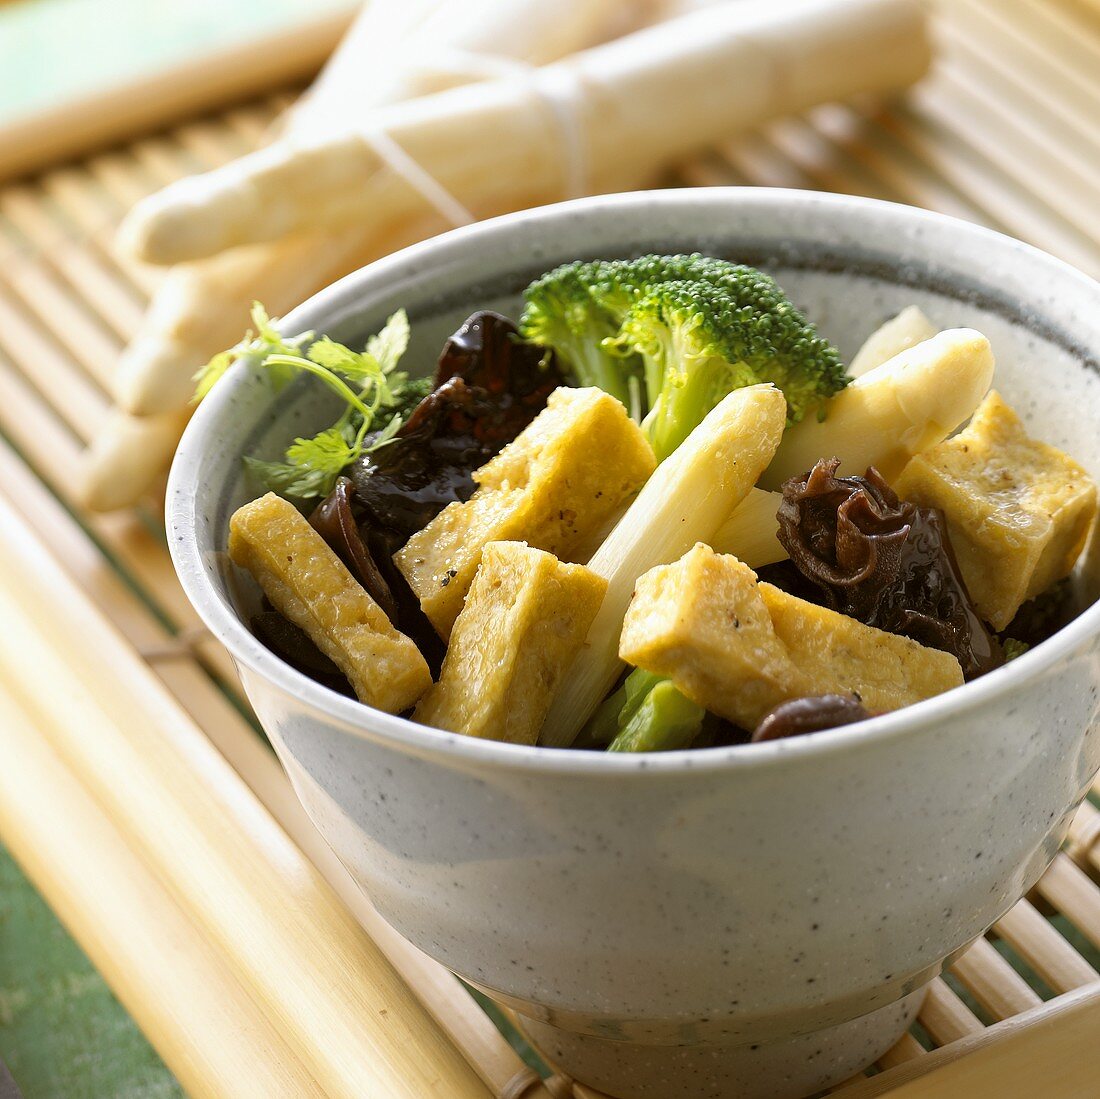 Spargel mit Tofu, Mu-Err-Pilzen und Brokkoli (China)